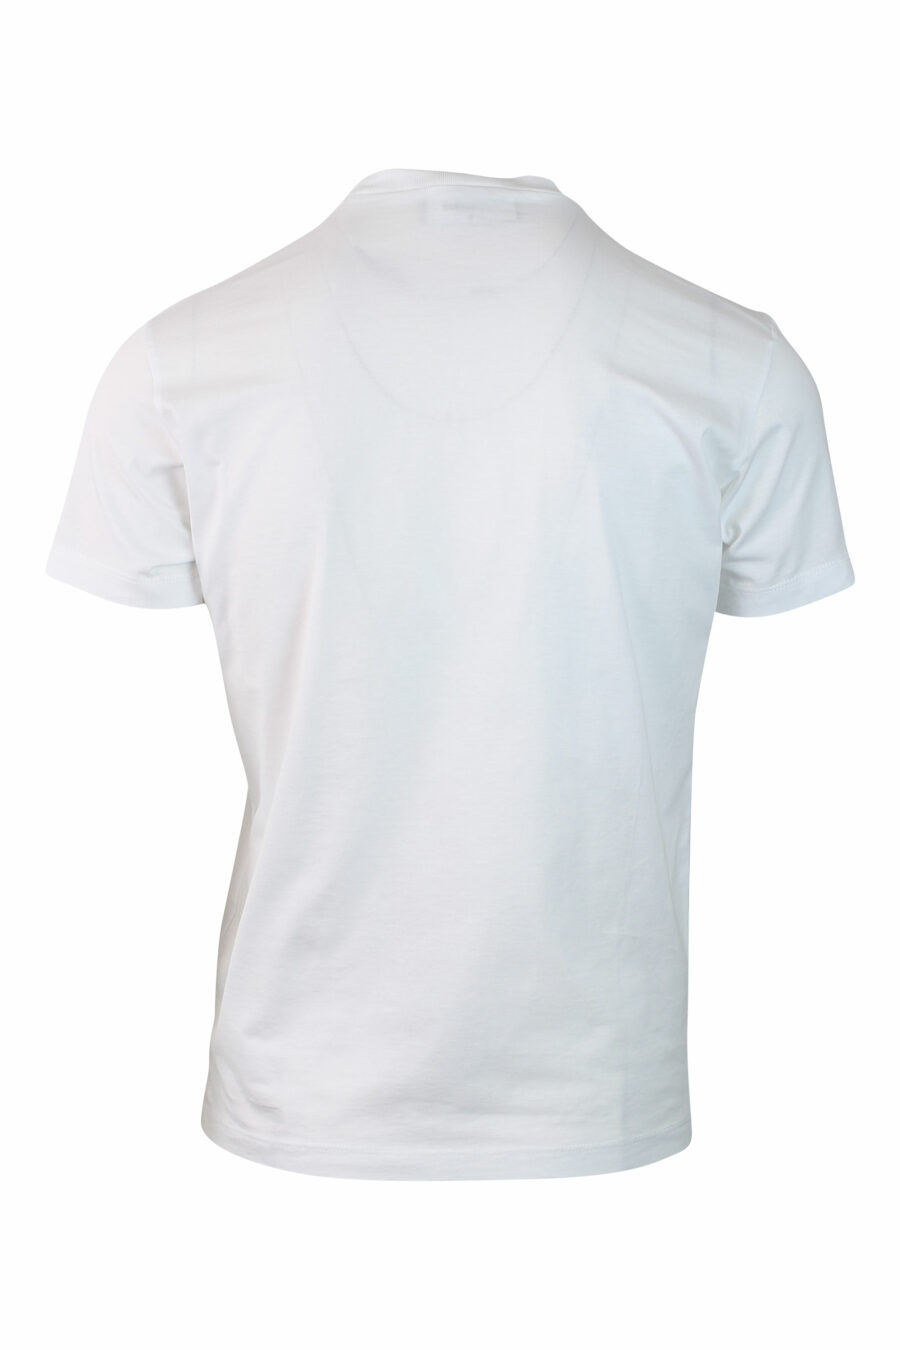 T-shirt branca com minilogo - IMG 0134